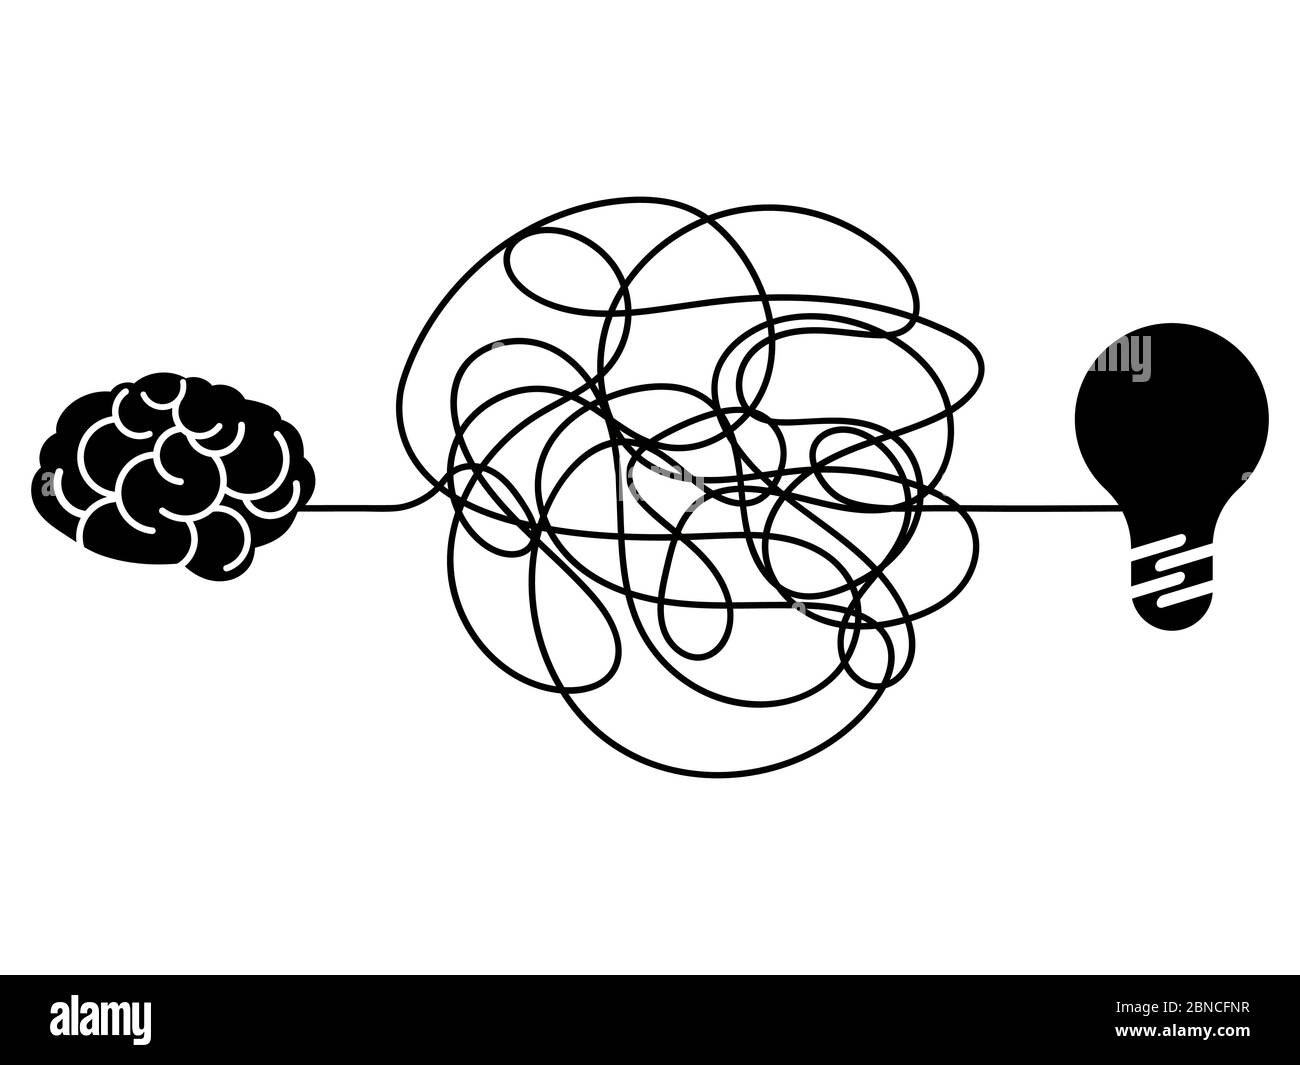 Confused process, chaos line symbol. Tangled scribble idea, insane brain vector concept. Illustration of chaos scribble doodle, tangle brainwork Stock Vector